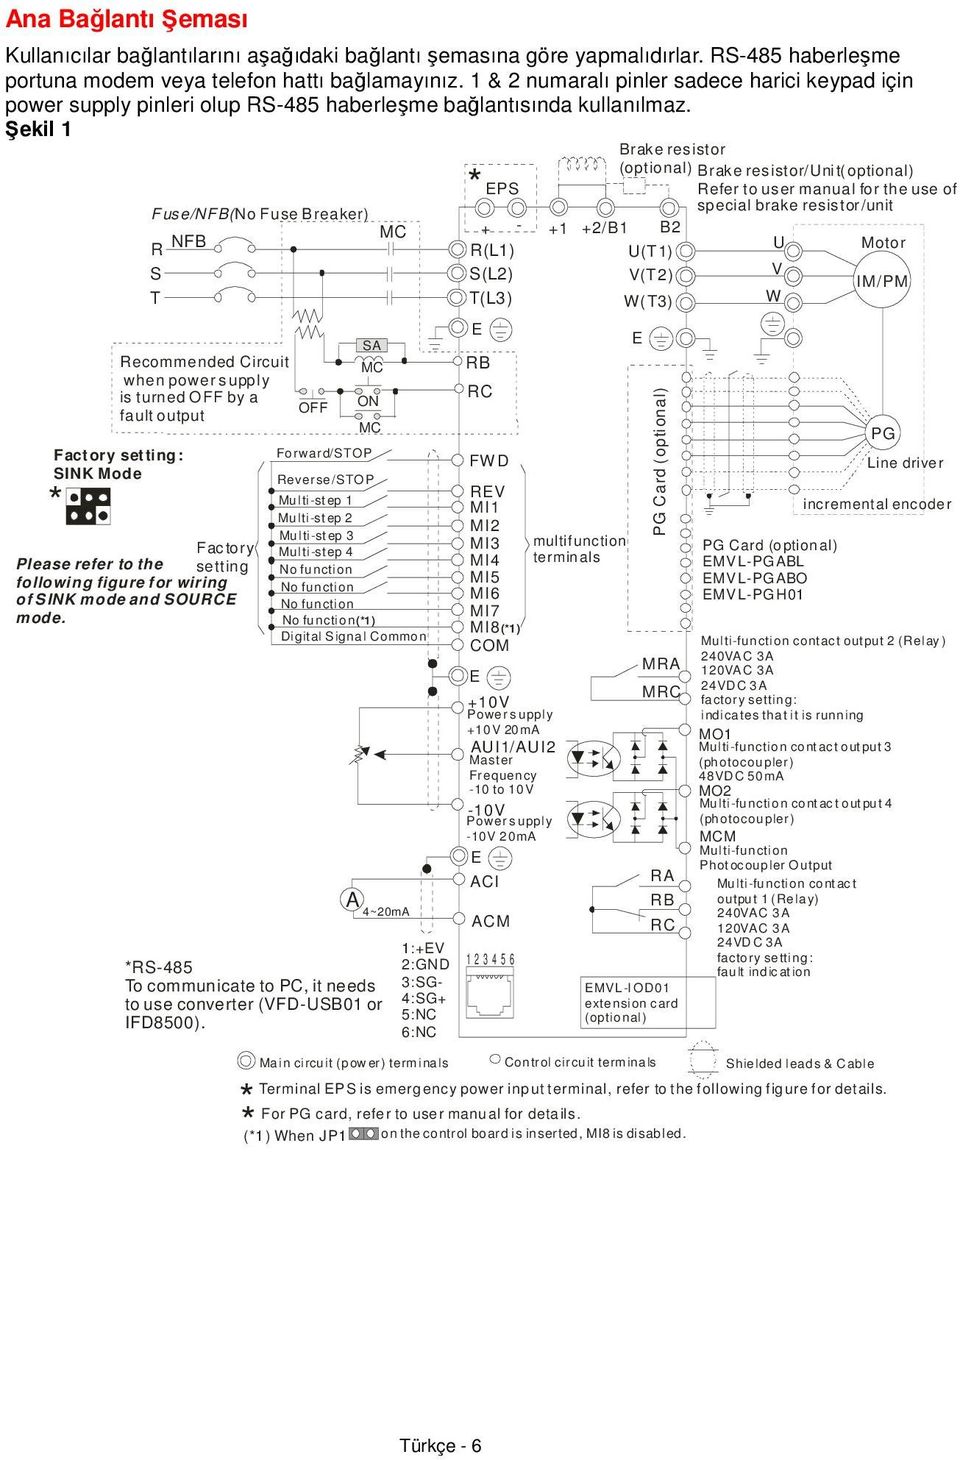 Şekil 1 Brake res istor (optional) Brak e res istor/uni t(optional) * EPS Refer to us er manual for the use of special brake resistor/unit F us e/nf B(No Fuse B reaker) MC + - +1 +2/B1 B2 * R S T NFB